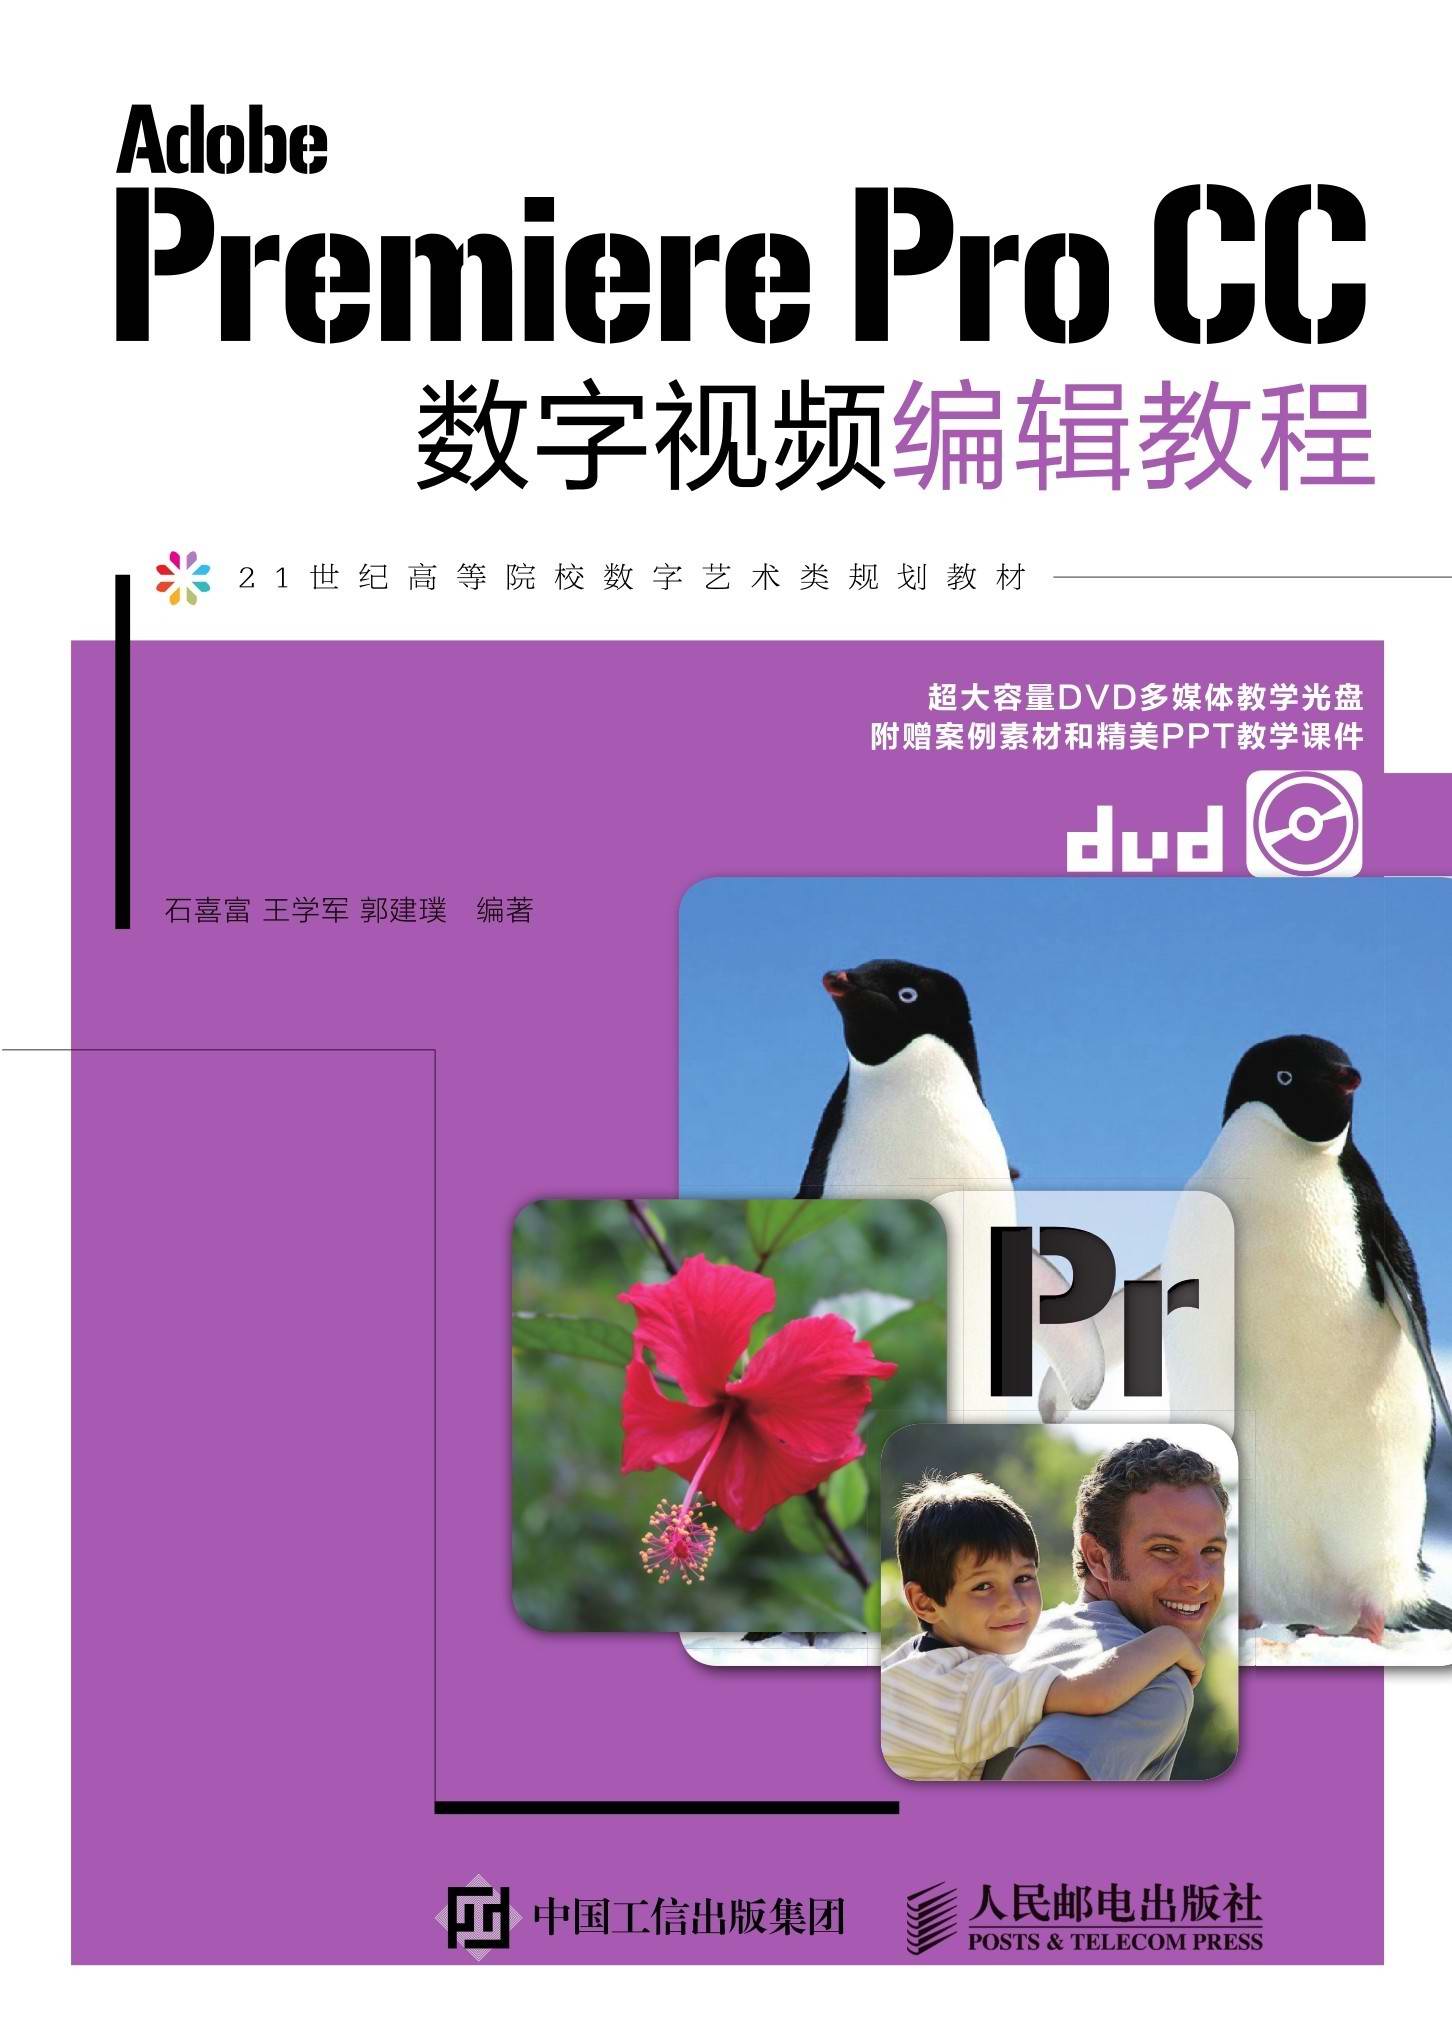 Adobe Premiere Pro CC 数字视频编辑教程